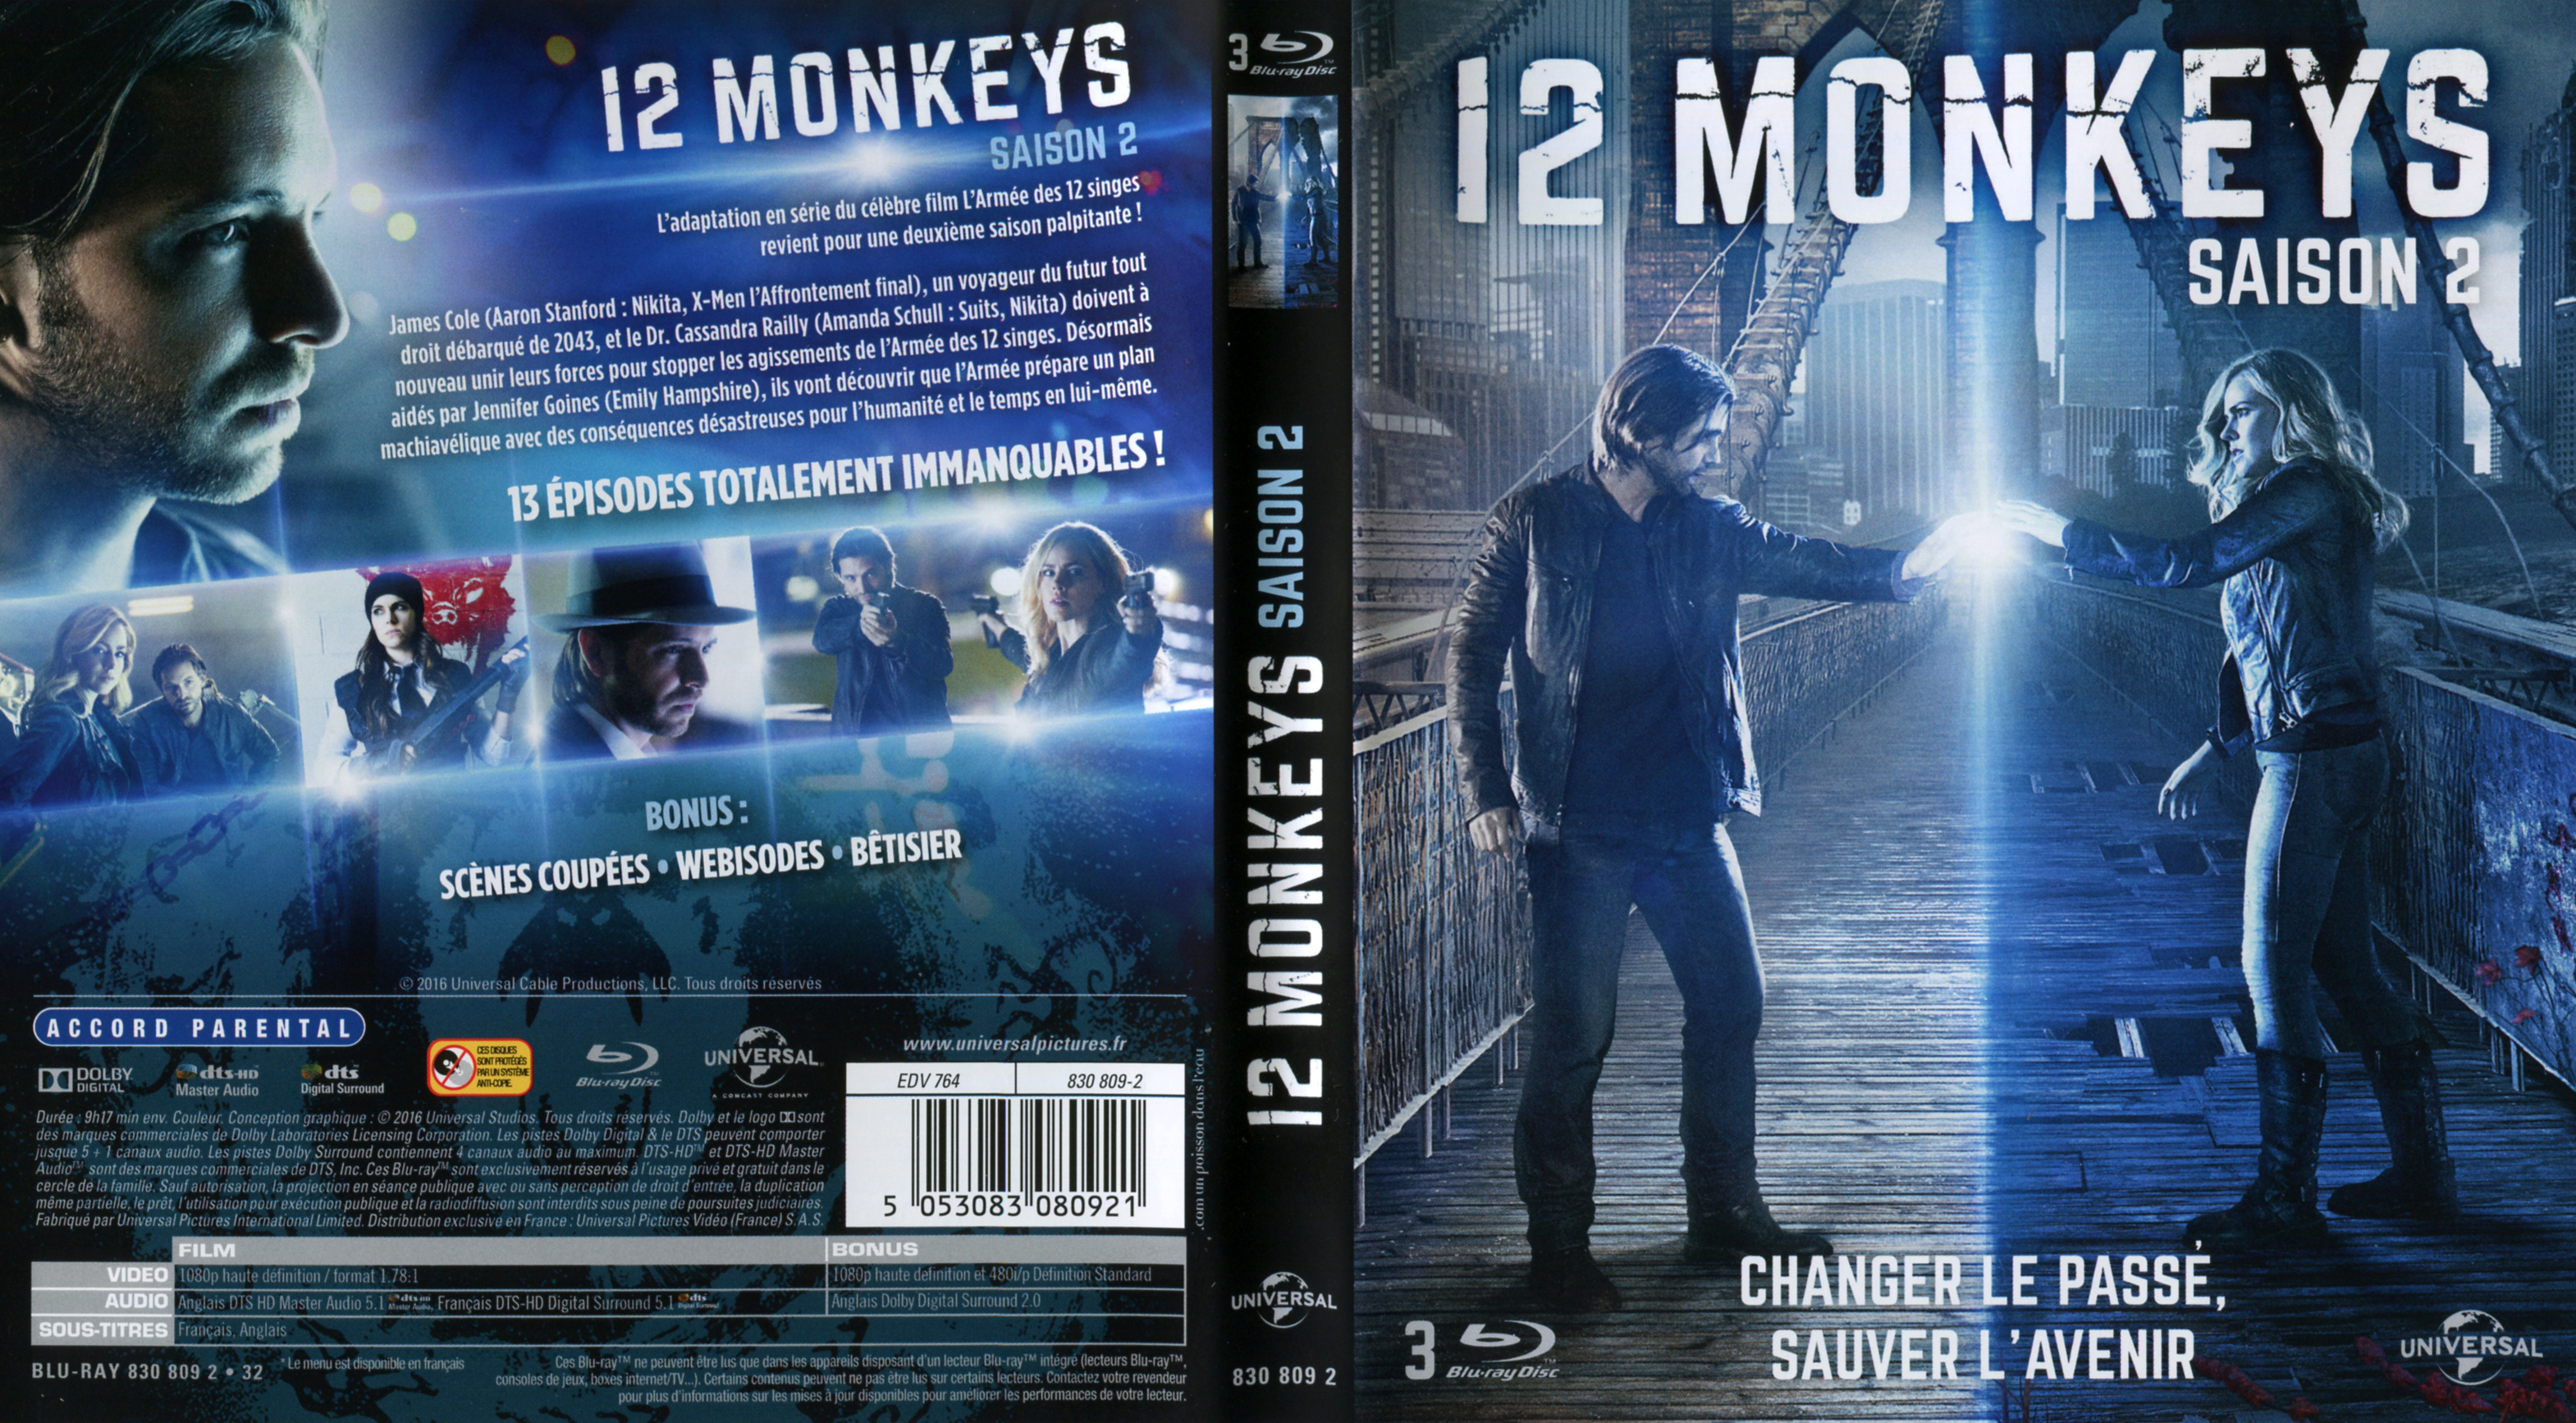 Jaquette DVD 12 Monkeys Saison 2 (BLU-RAY)